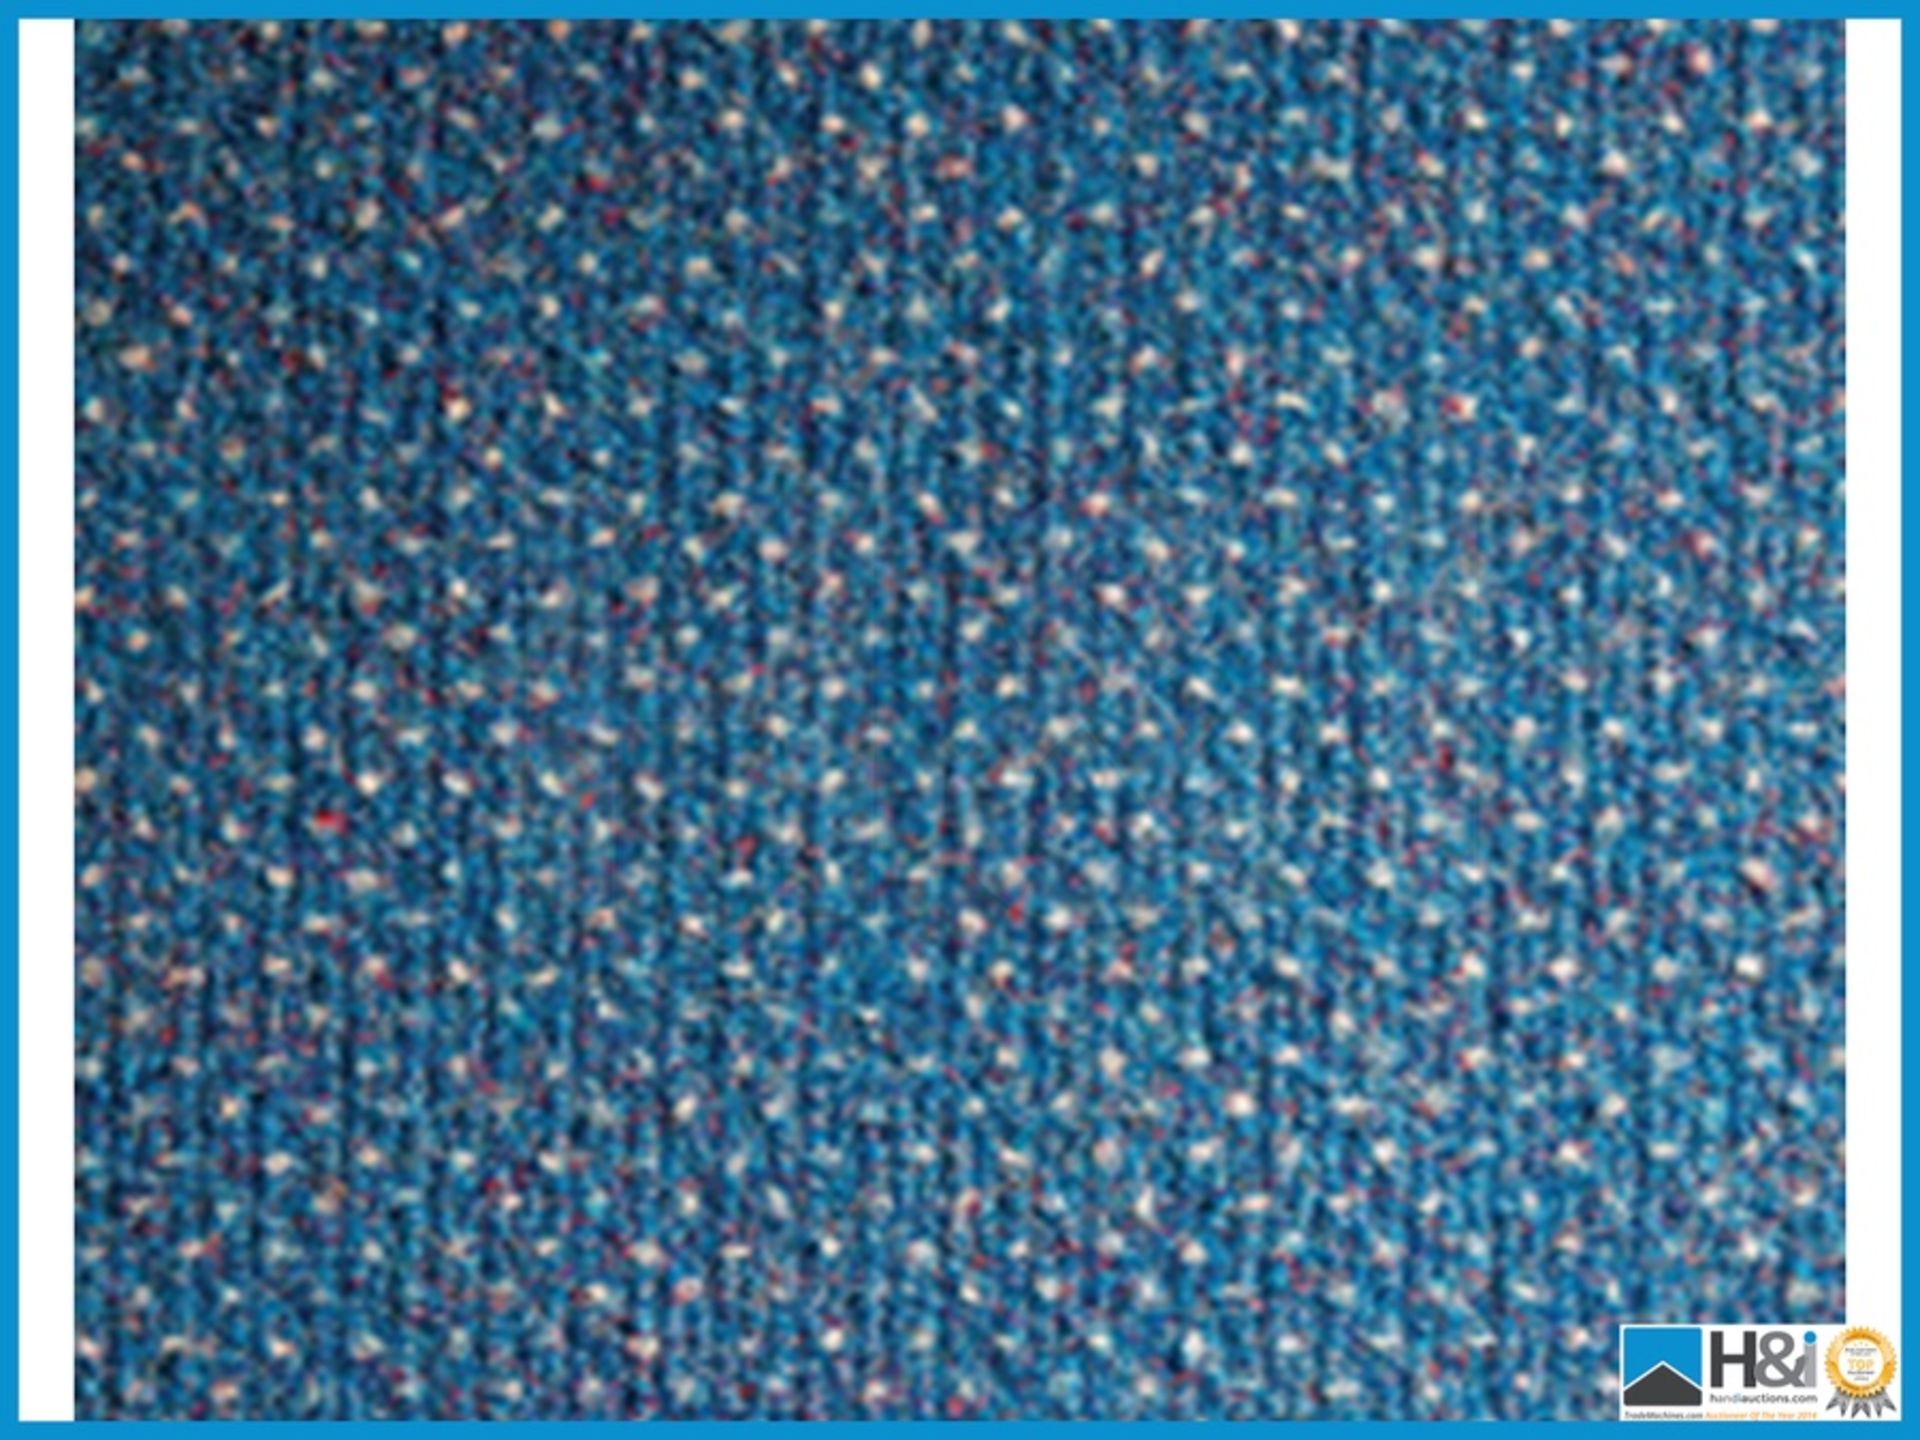 Heckmondwike Montage - Cobalt - Innovative Montage with its distinctive, random textured, surface